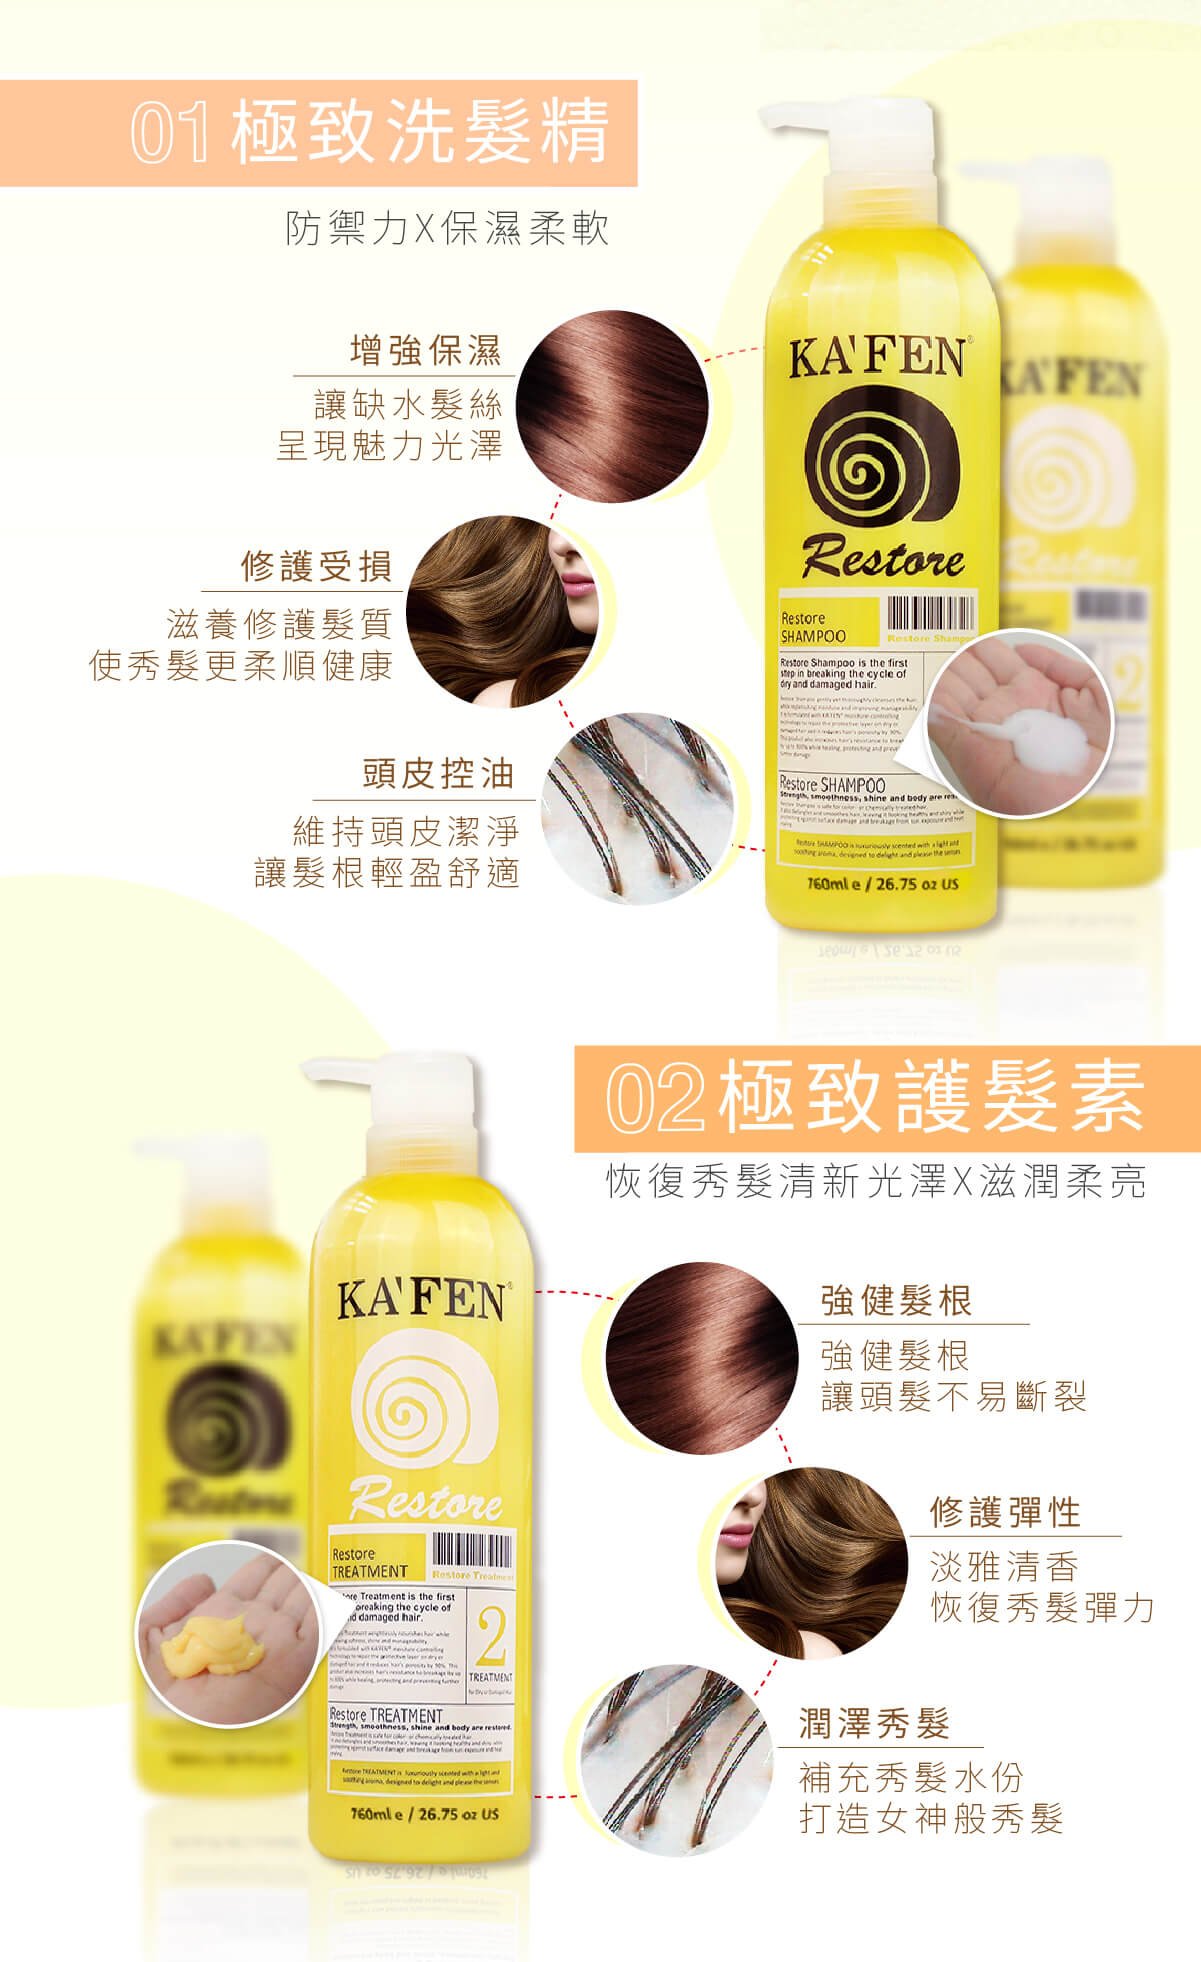 Kafen Snail Restore Shampoo - Series